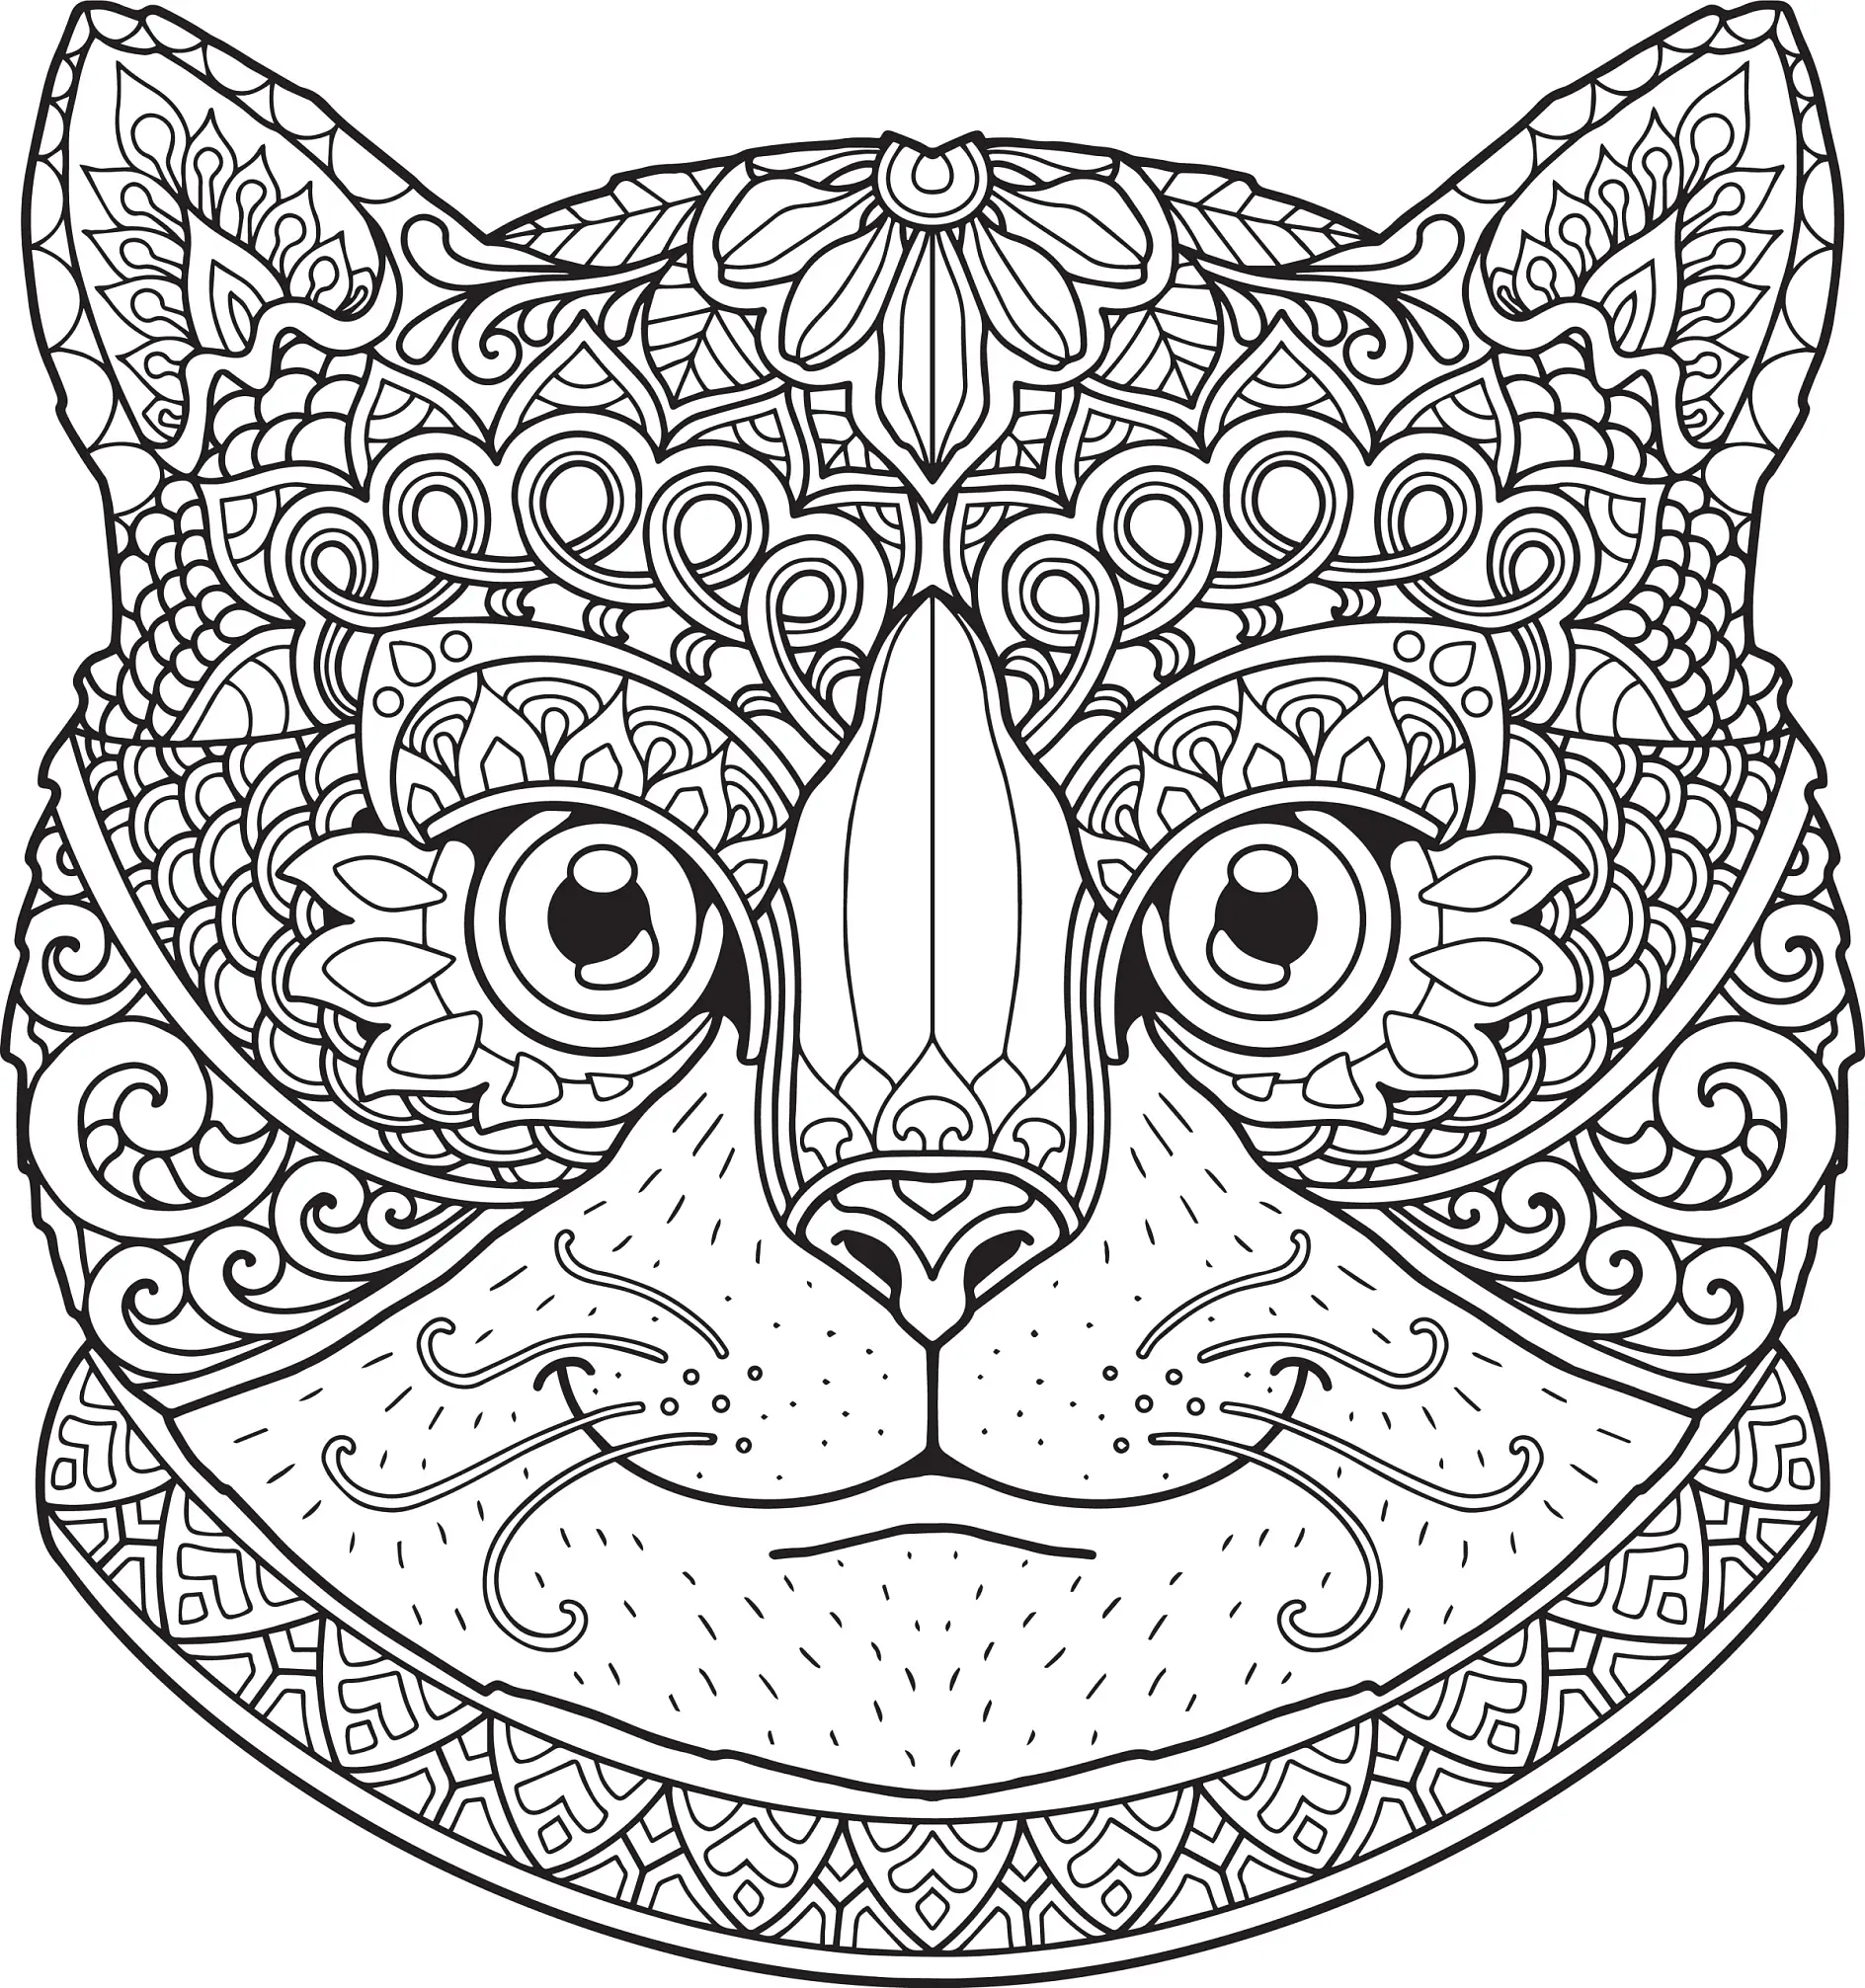 Ausmalbild Mandala Katze mit kunstvollen Mustern